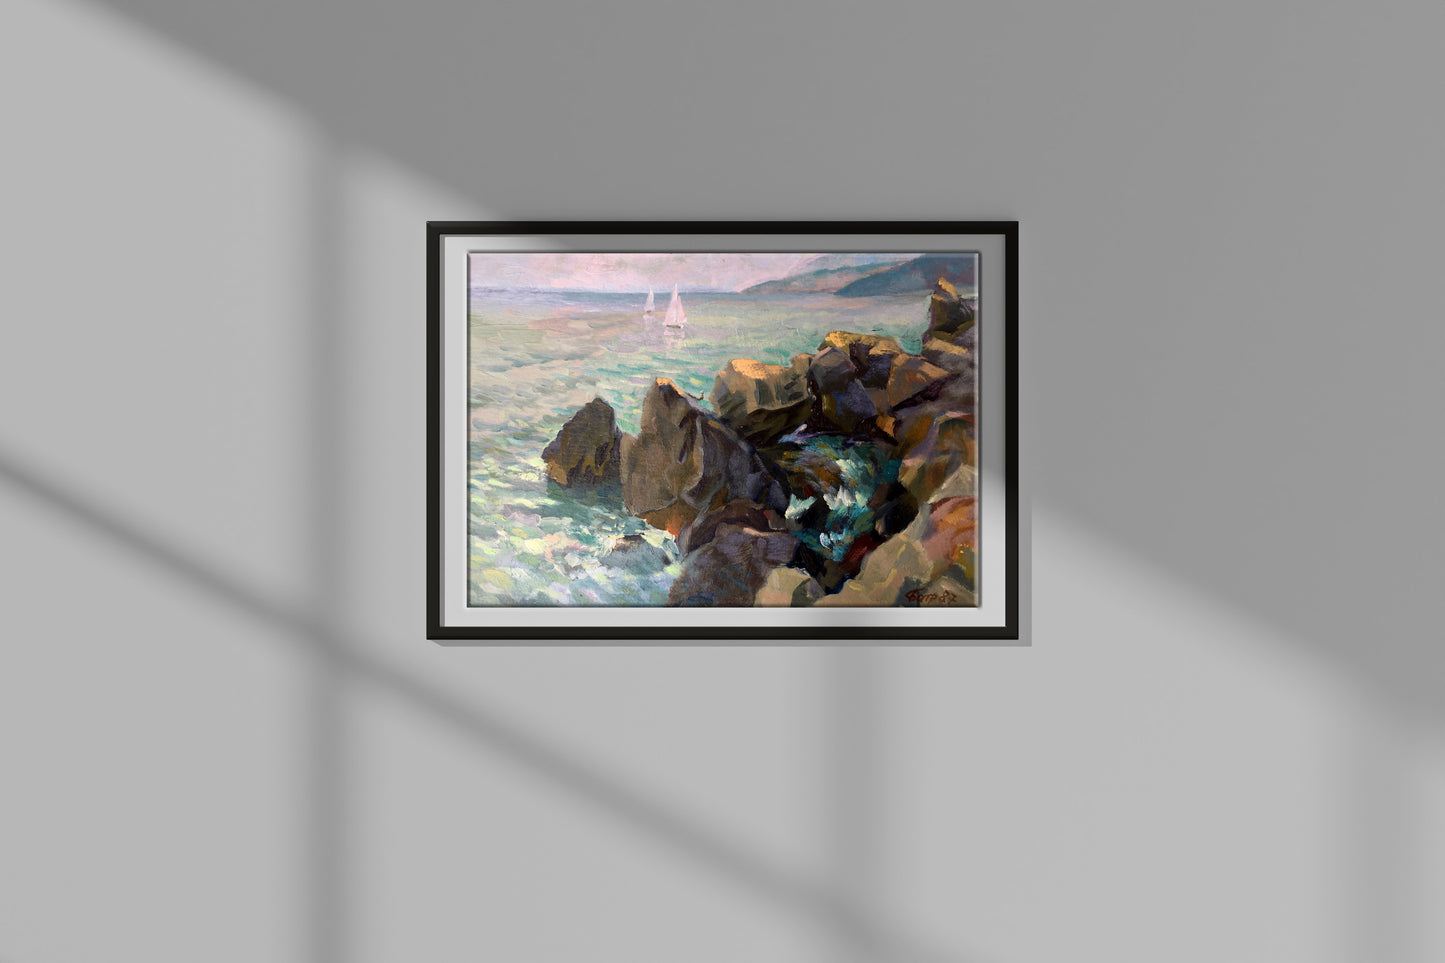 Batrakov's "Morning by the Sea" oil painting, evoking serene coastal ambiance.